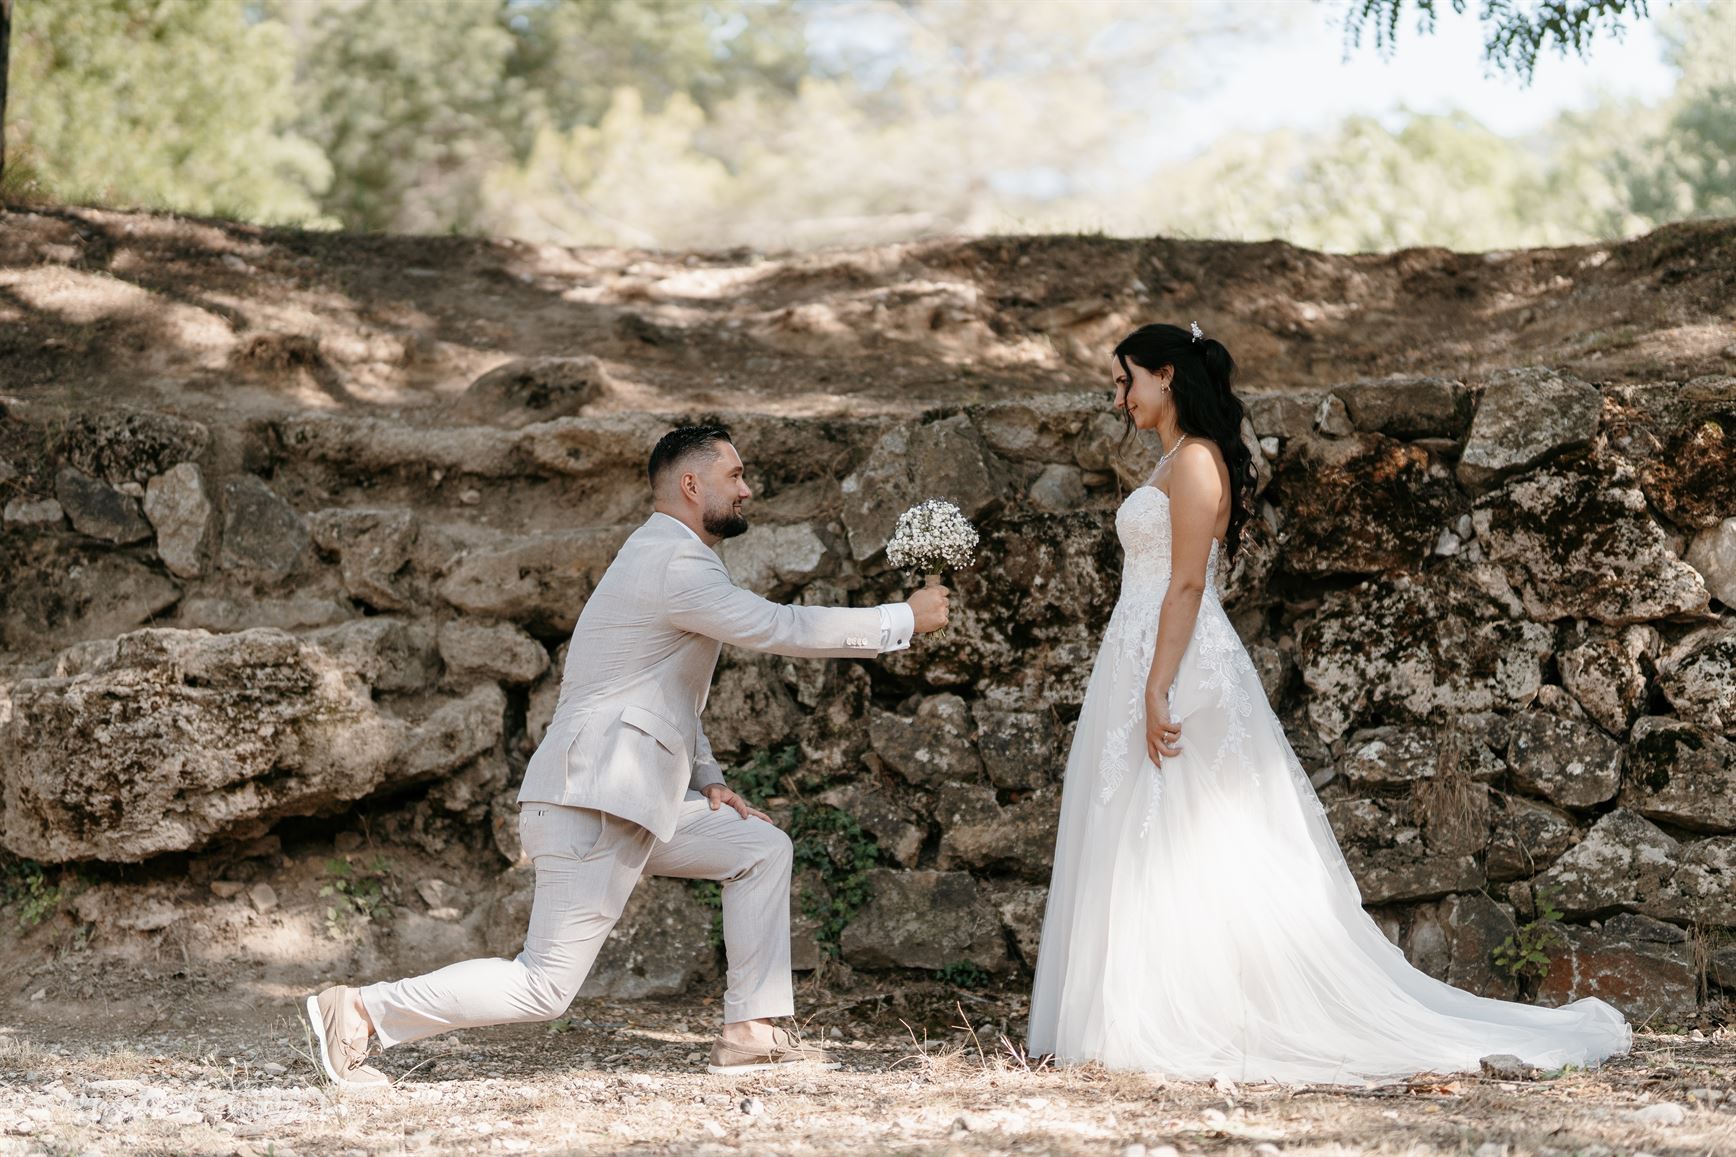 Wedding Photographer Aix en Provence: Capturing Love's Embrace 19